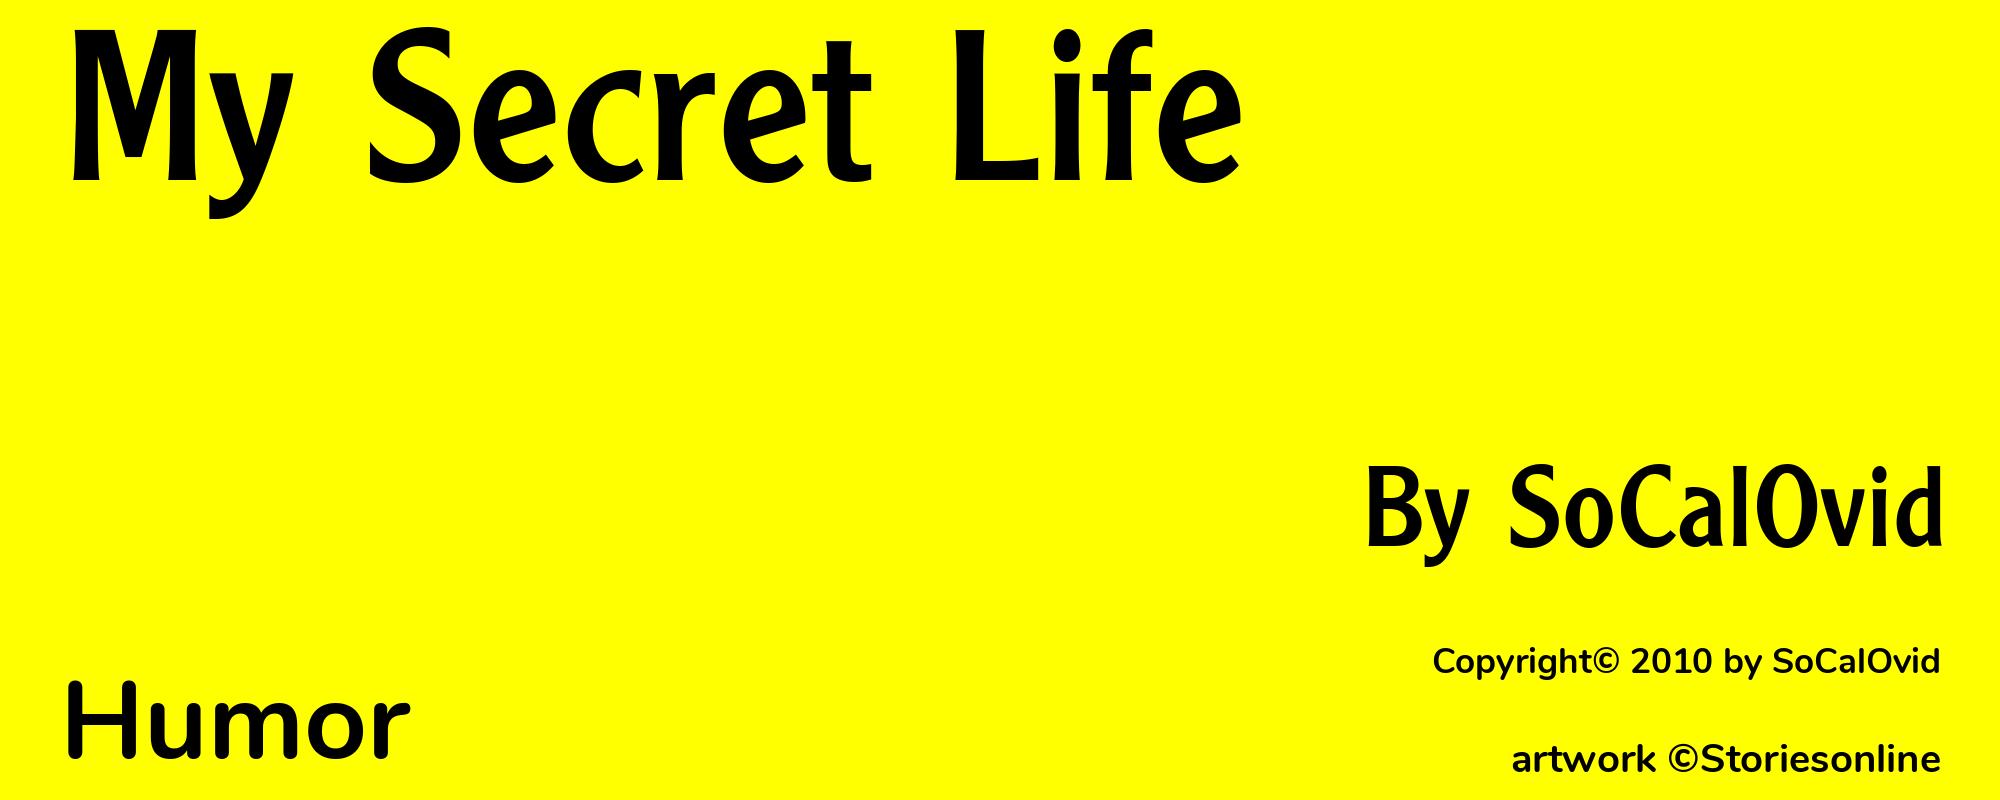 My Secret Life - Cover